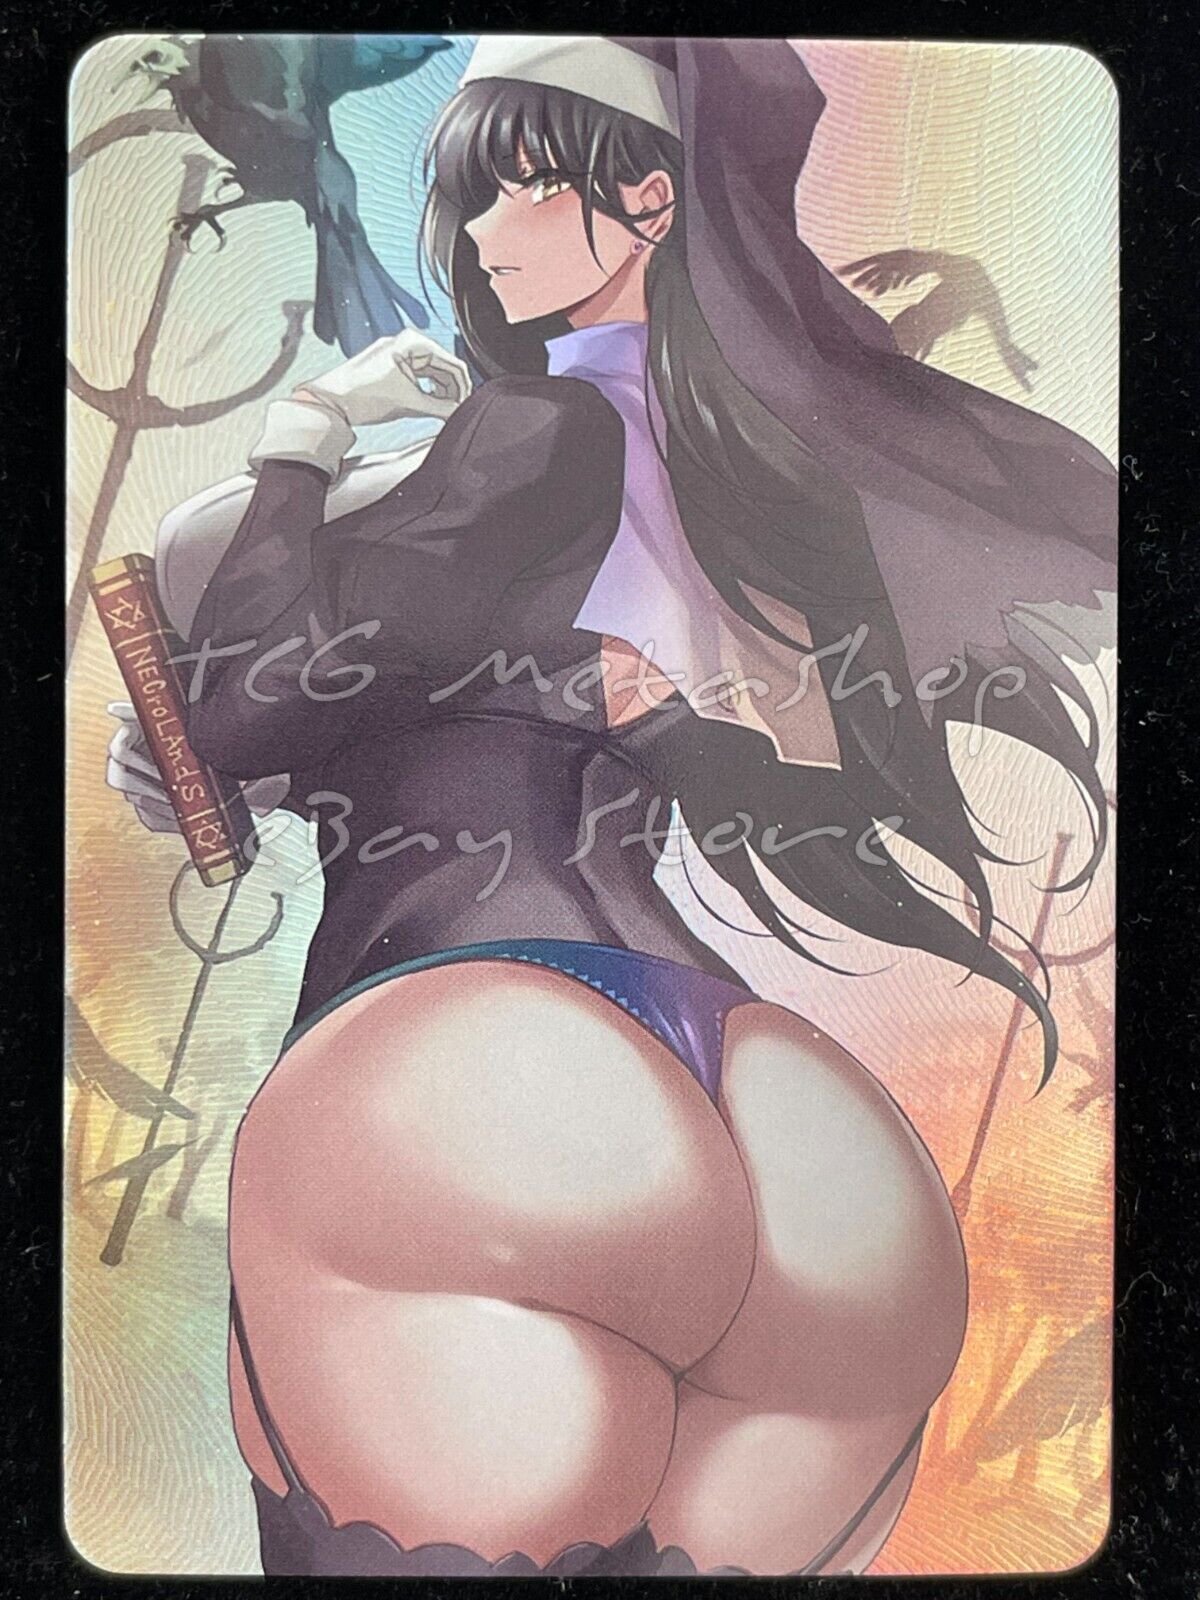 🔥 Sexy Girl Goddess Story Anime Card ACG # 277 🔥